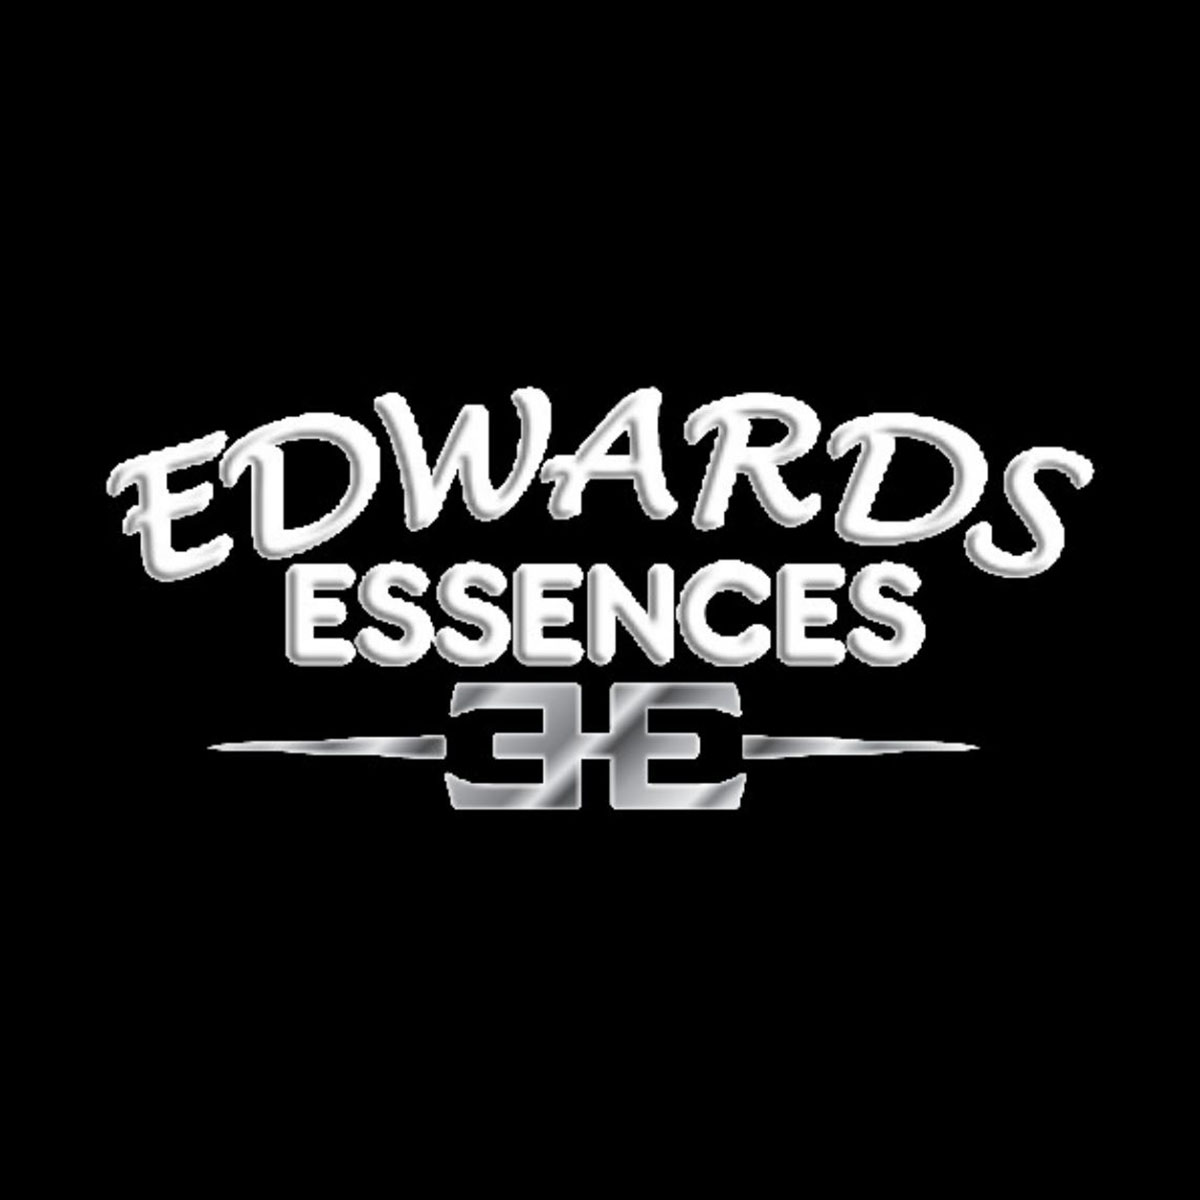 Edward Essences